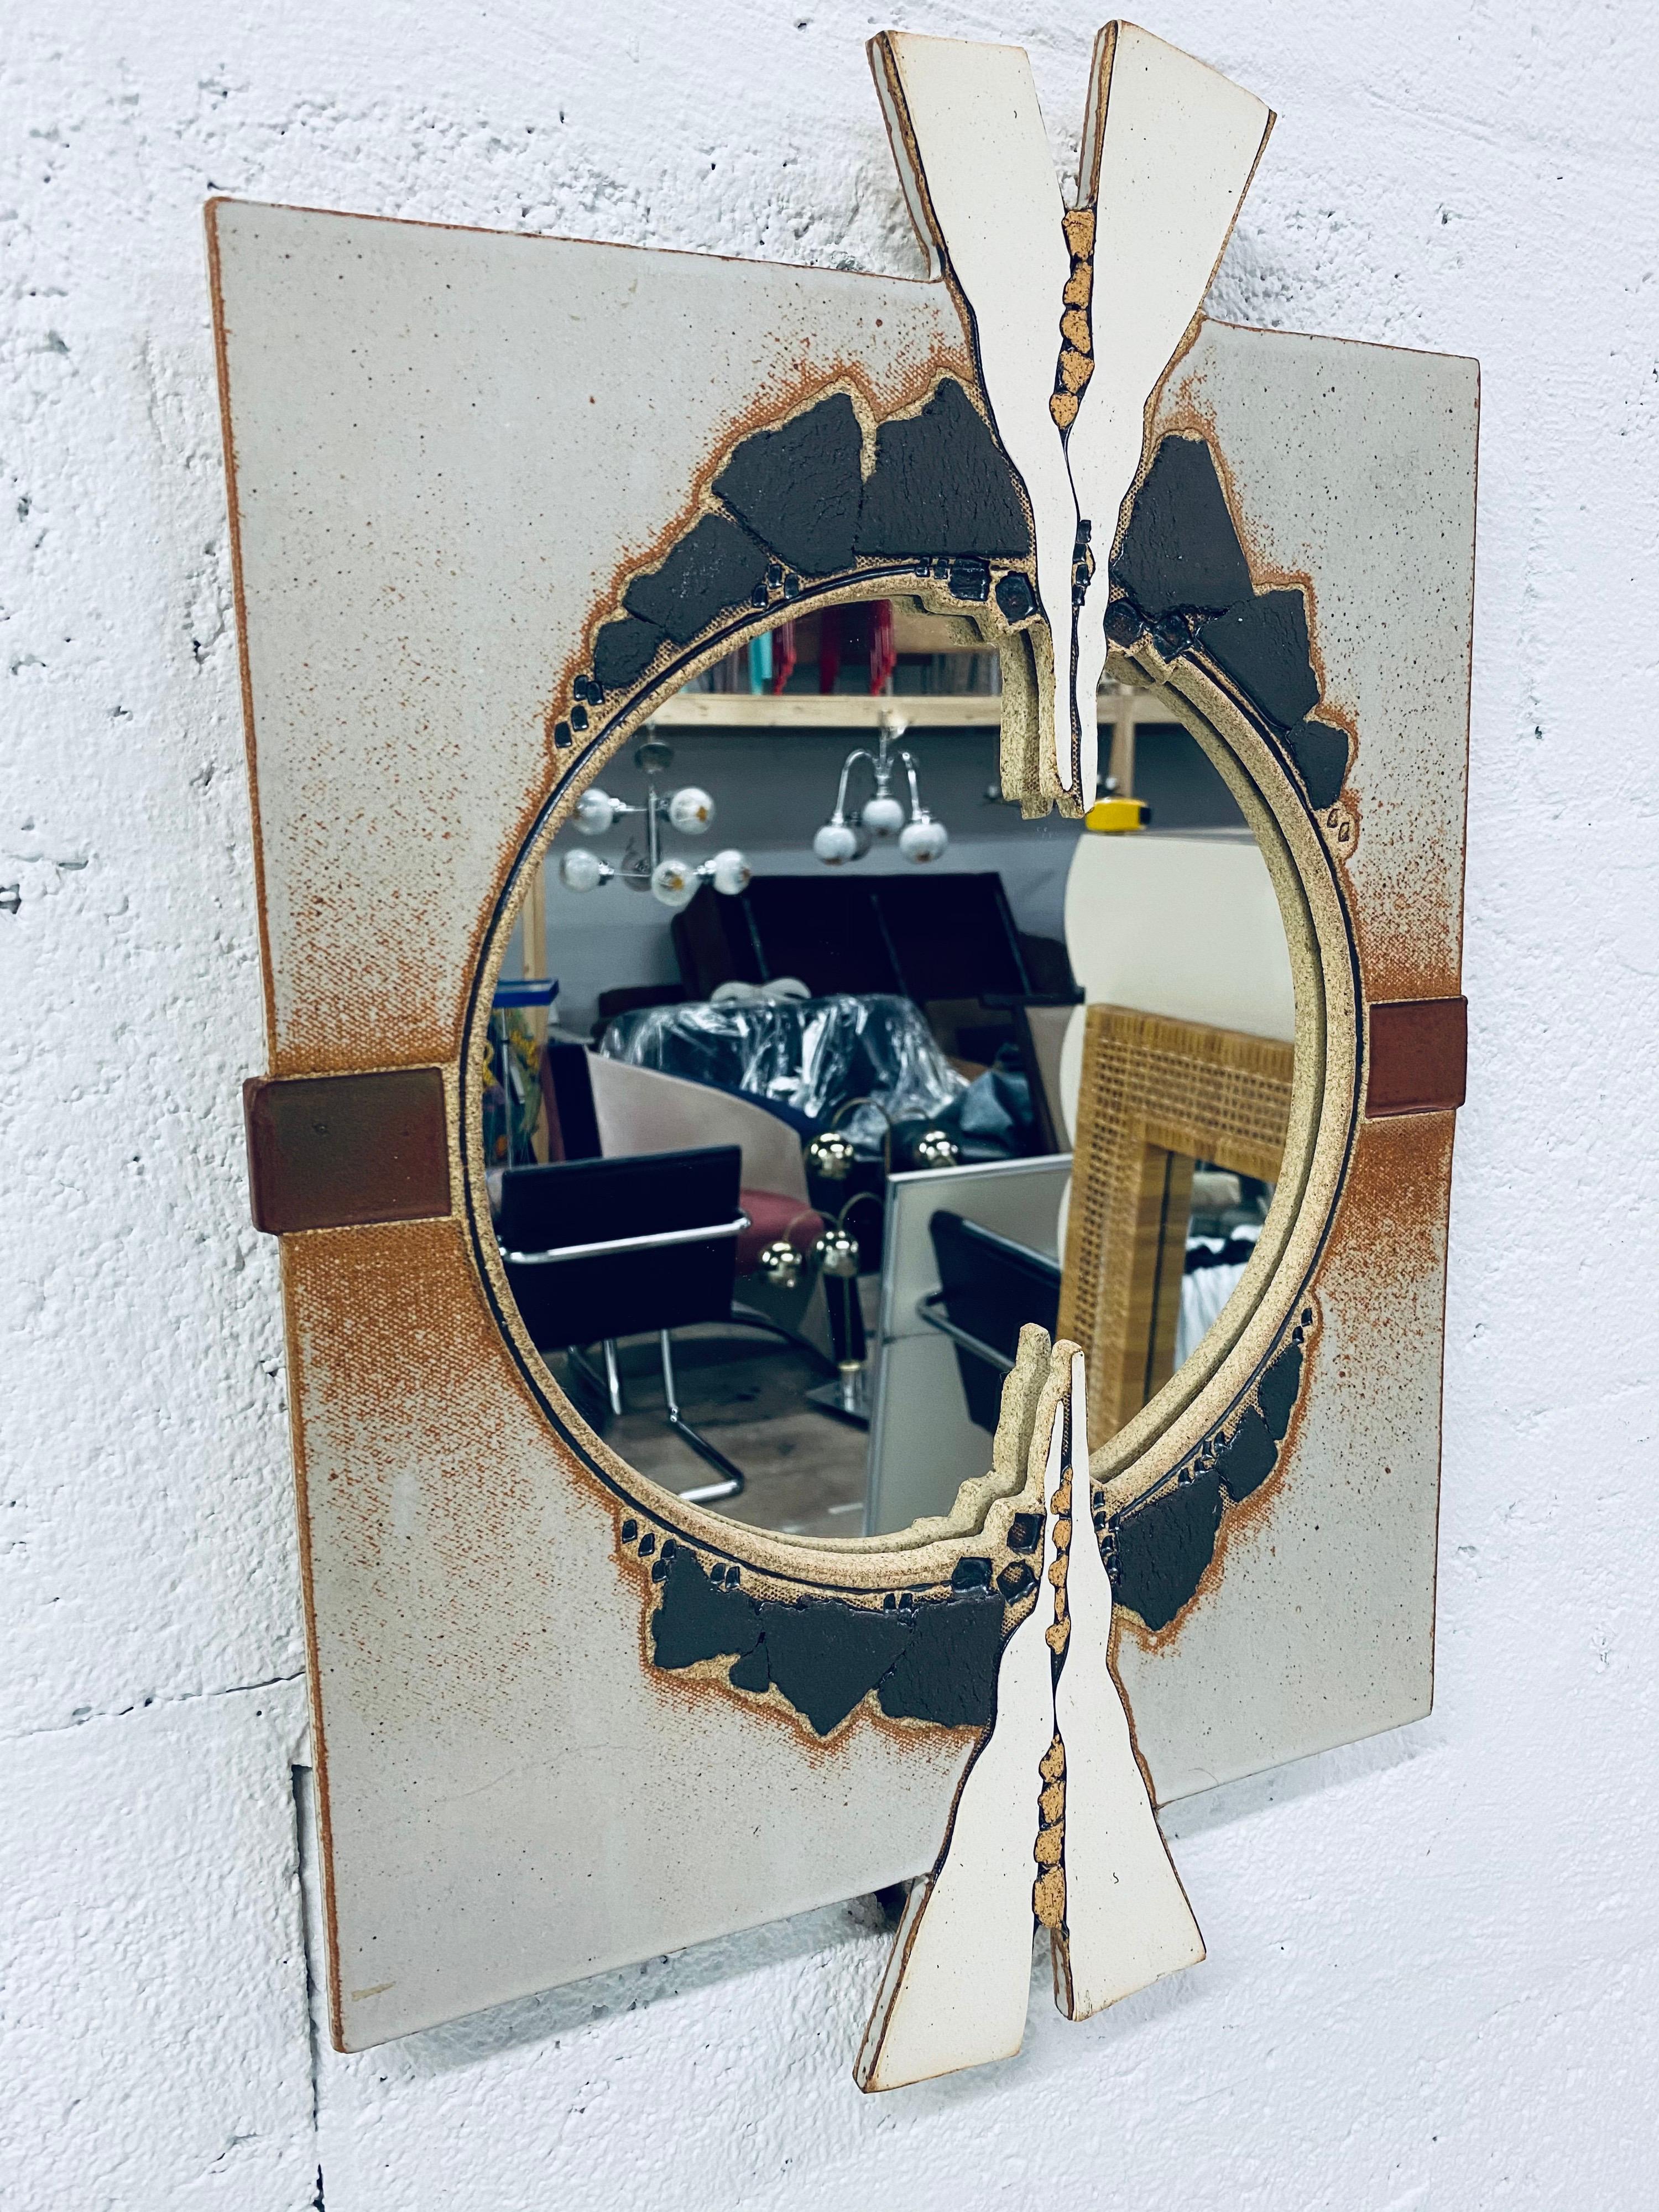 Artist-signed Postmodern sculpted ceramic mirror from 1983.